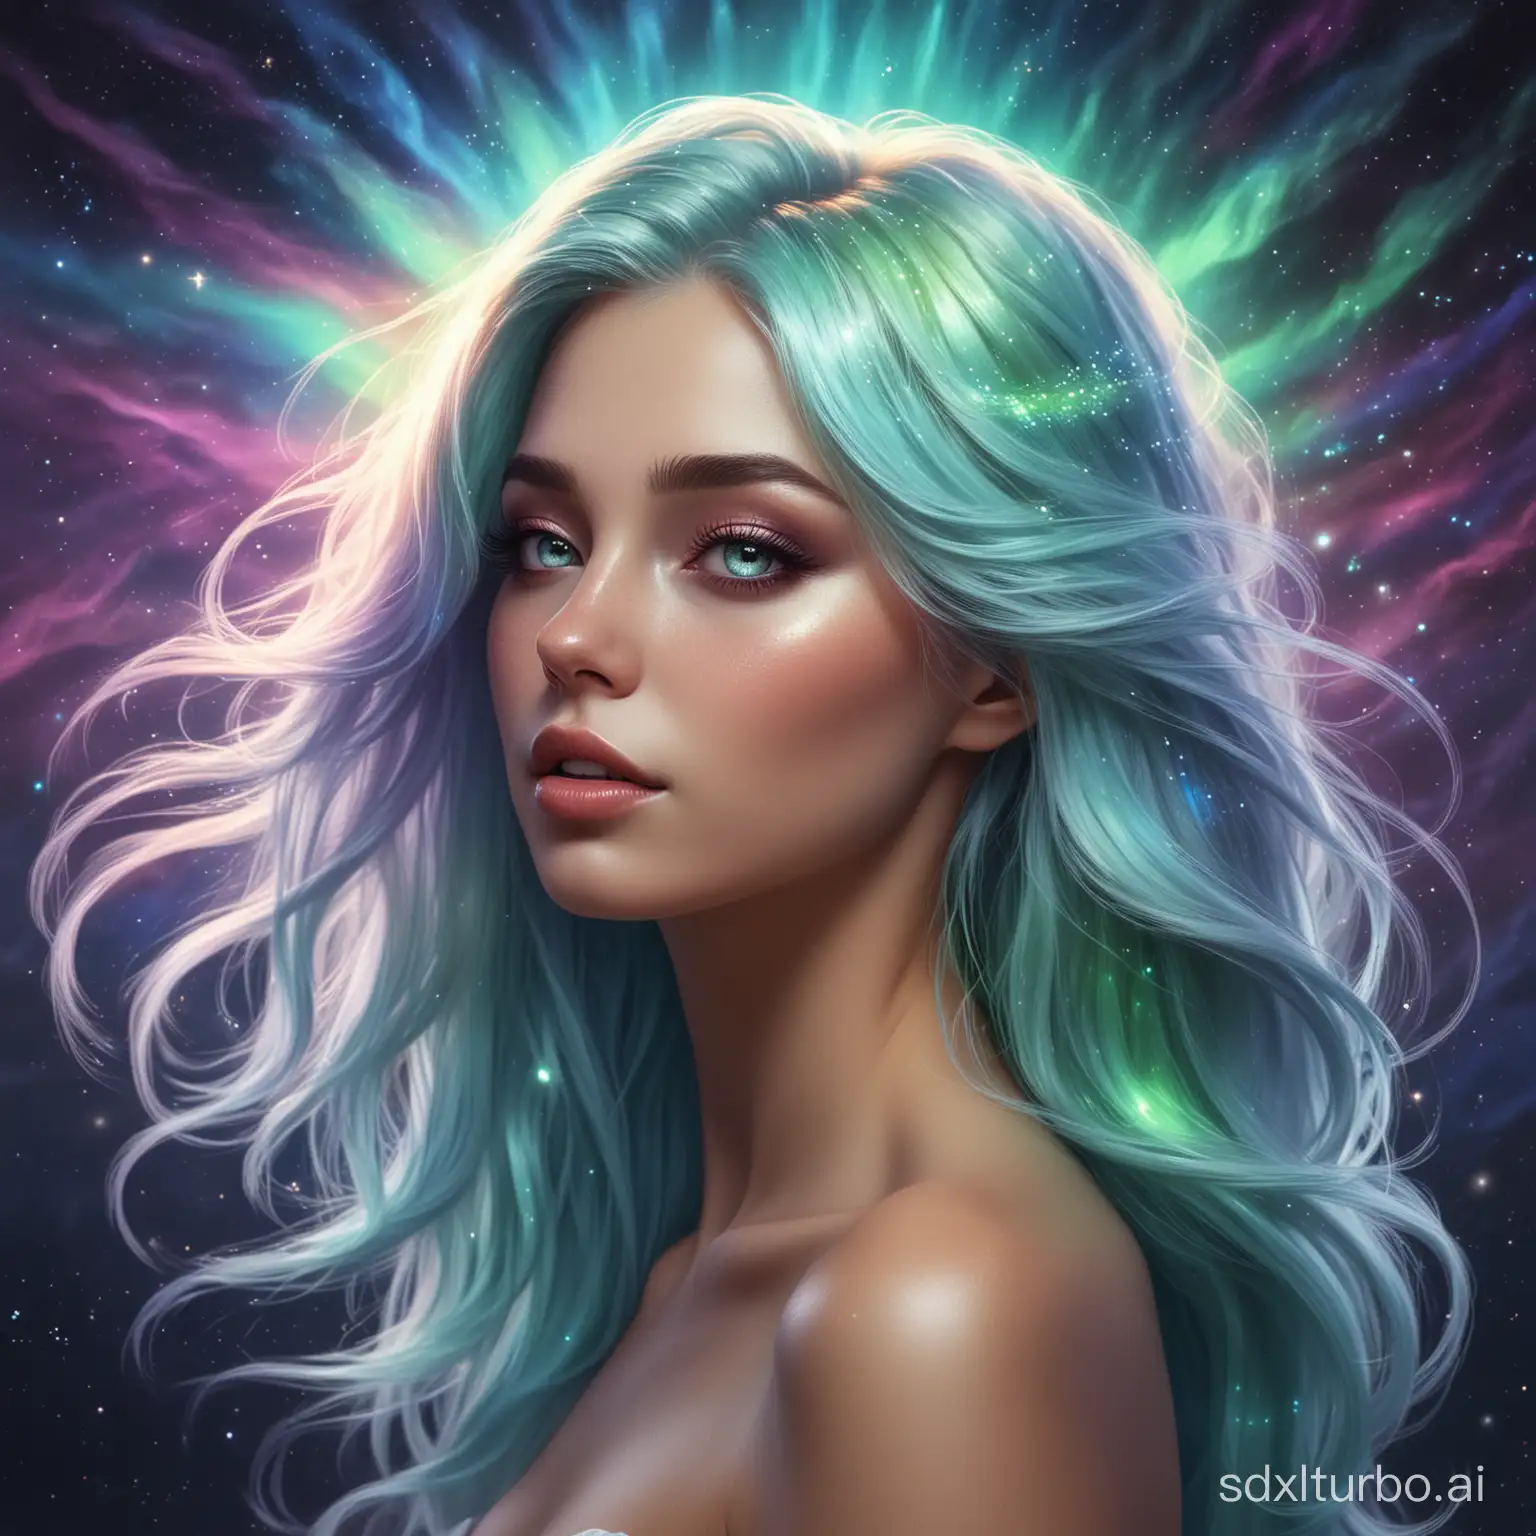 Enchanting-Woman-with-Aurora-Borealis-Hair-A-Realistic-Fantasy-Portrait